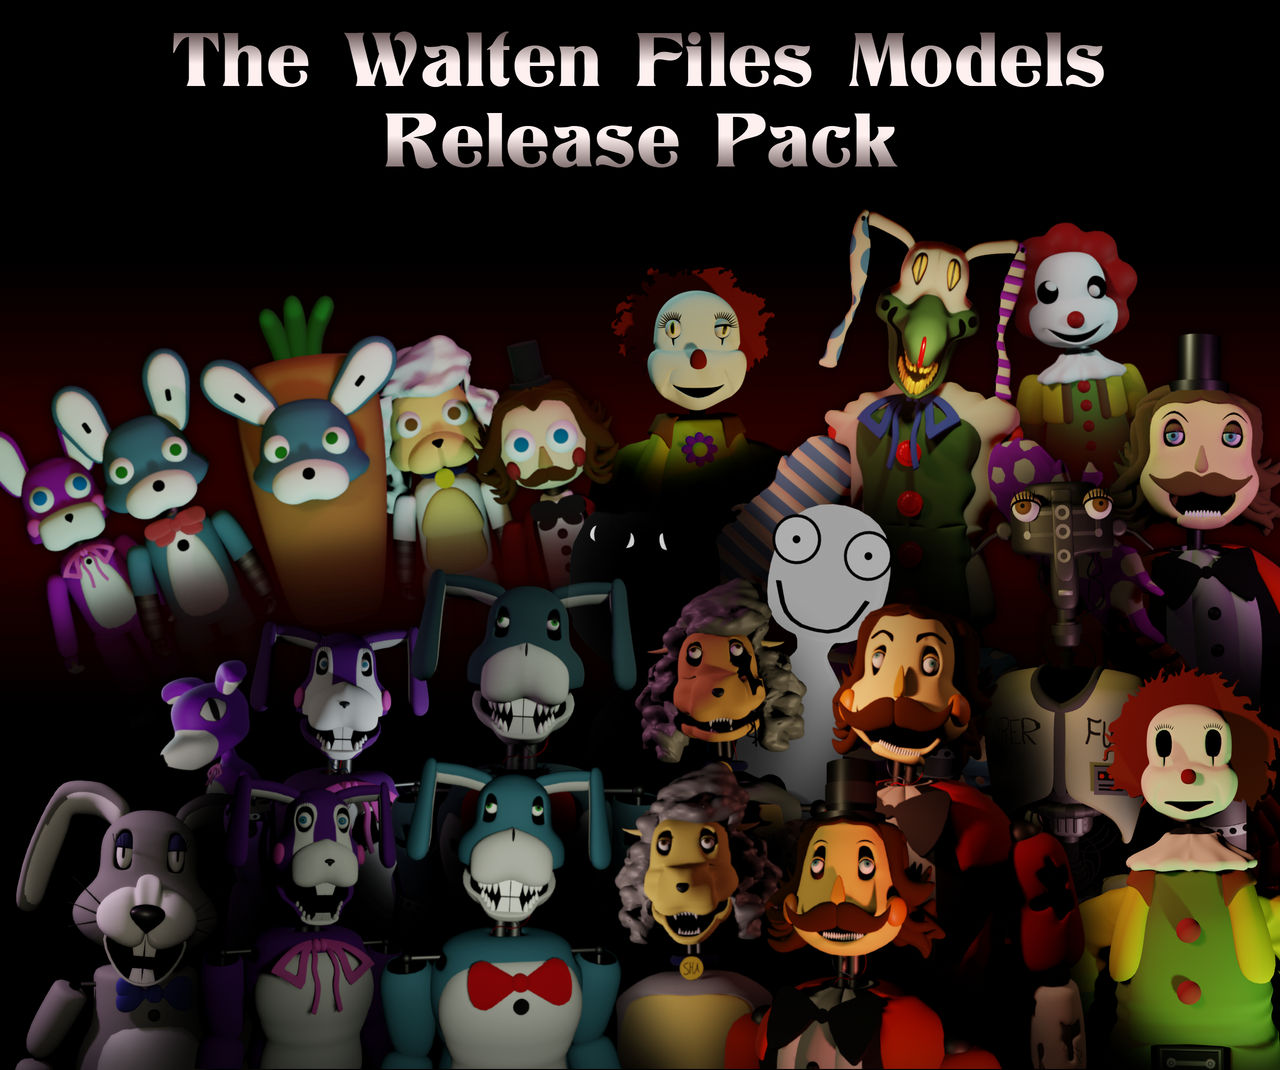 The Walten Files Models - Release Pack by DeviantArtBite on DeviantArt